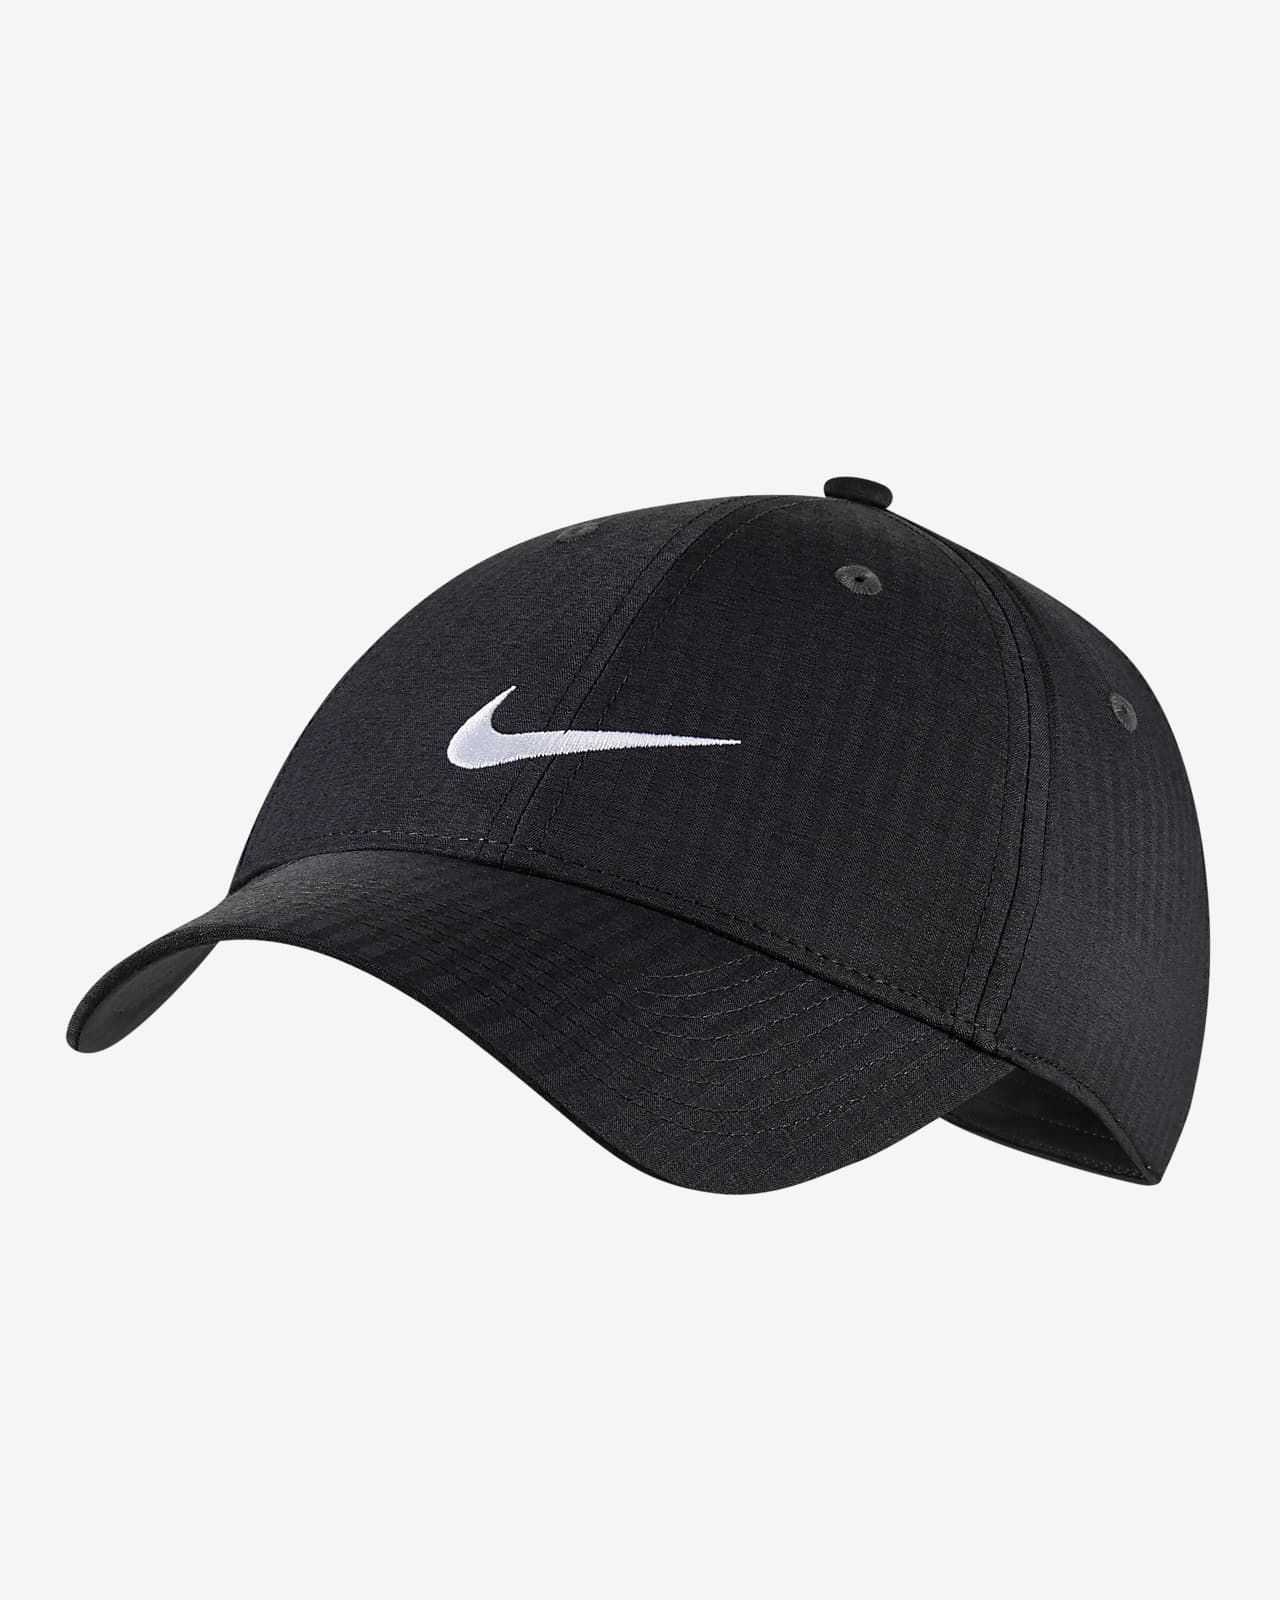 Nike公式 ナイキ レガシー91 ゴルフキャップ オンラインストア 通販サイト